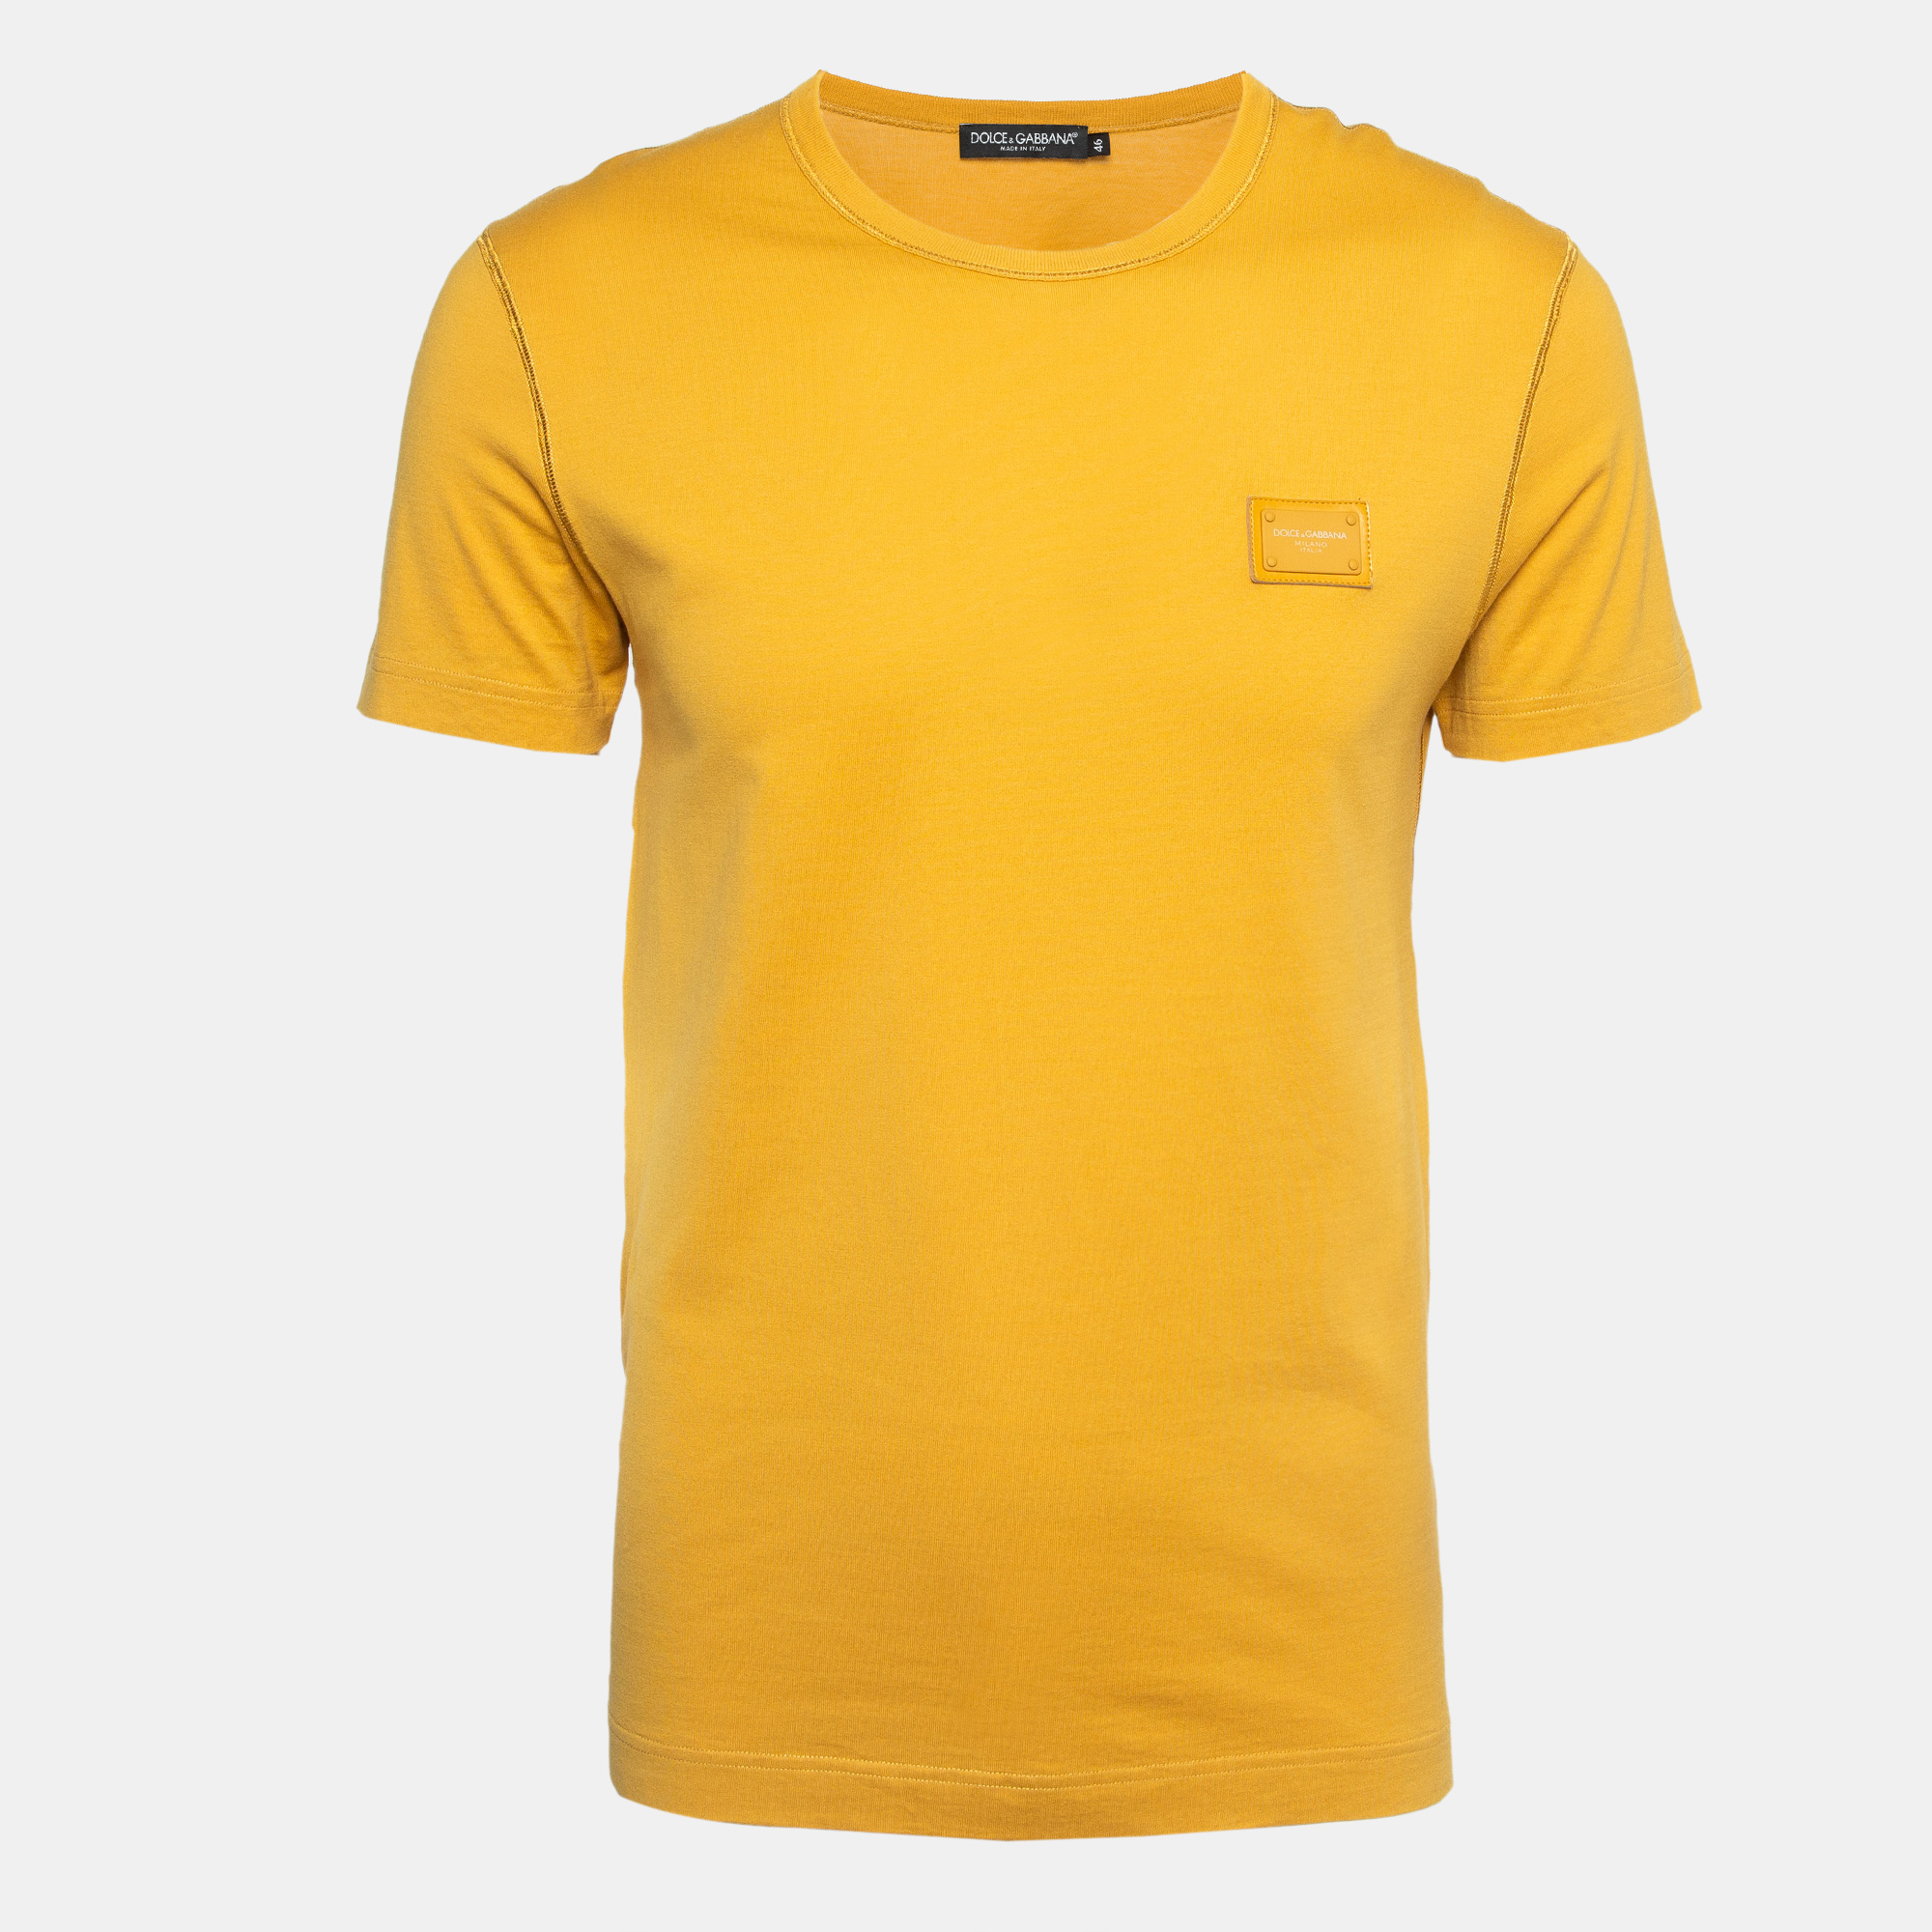 Dolce & gabbana yellow logo applique cotton knit crew neck t-shirt s